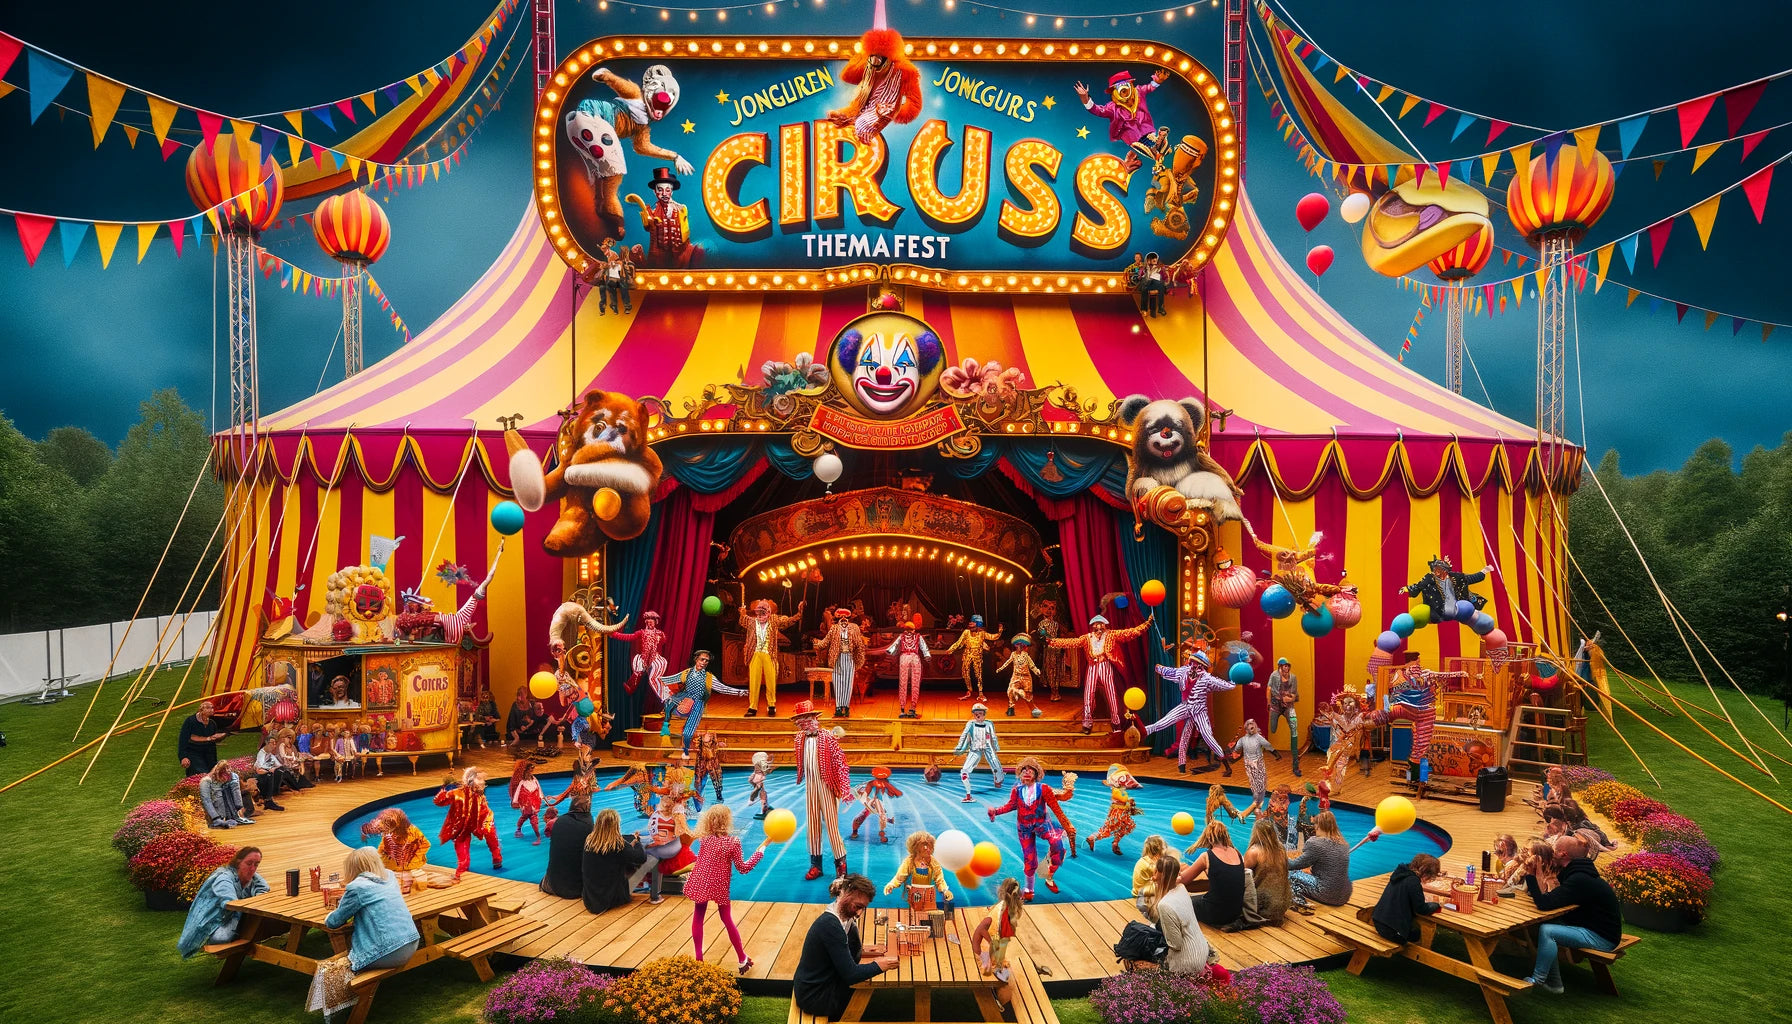 Themafeest circus